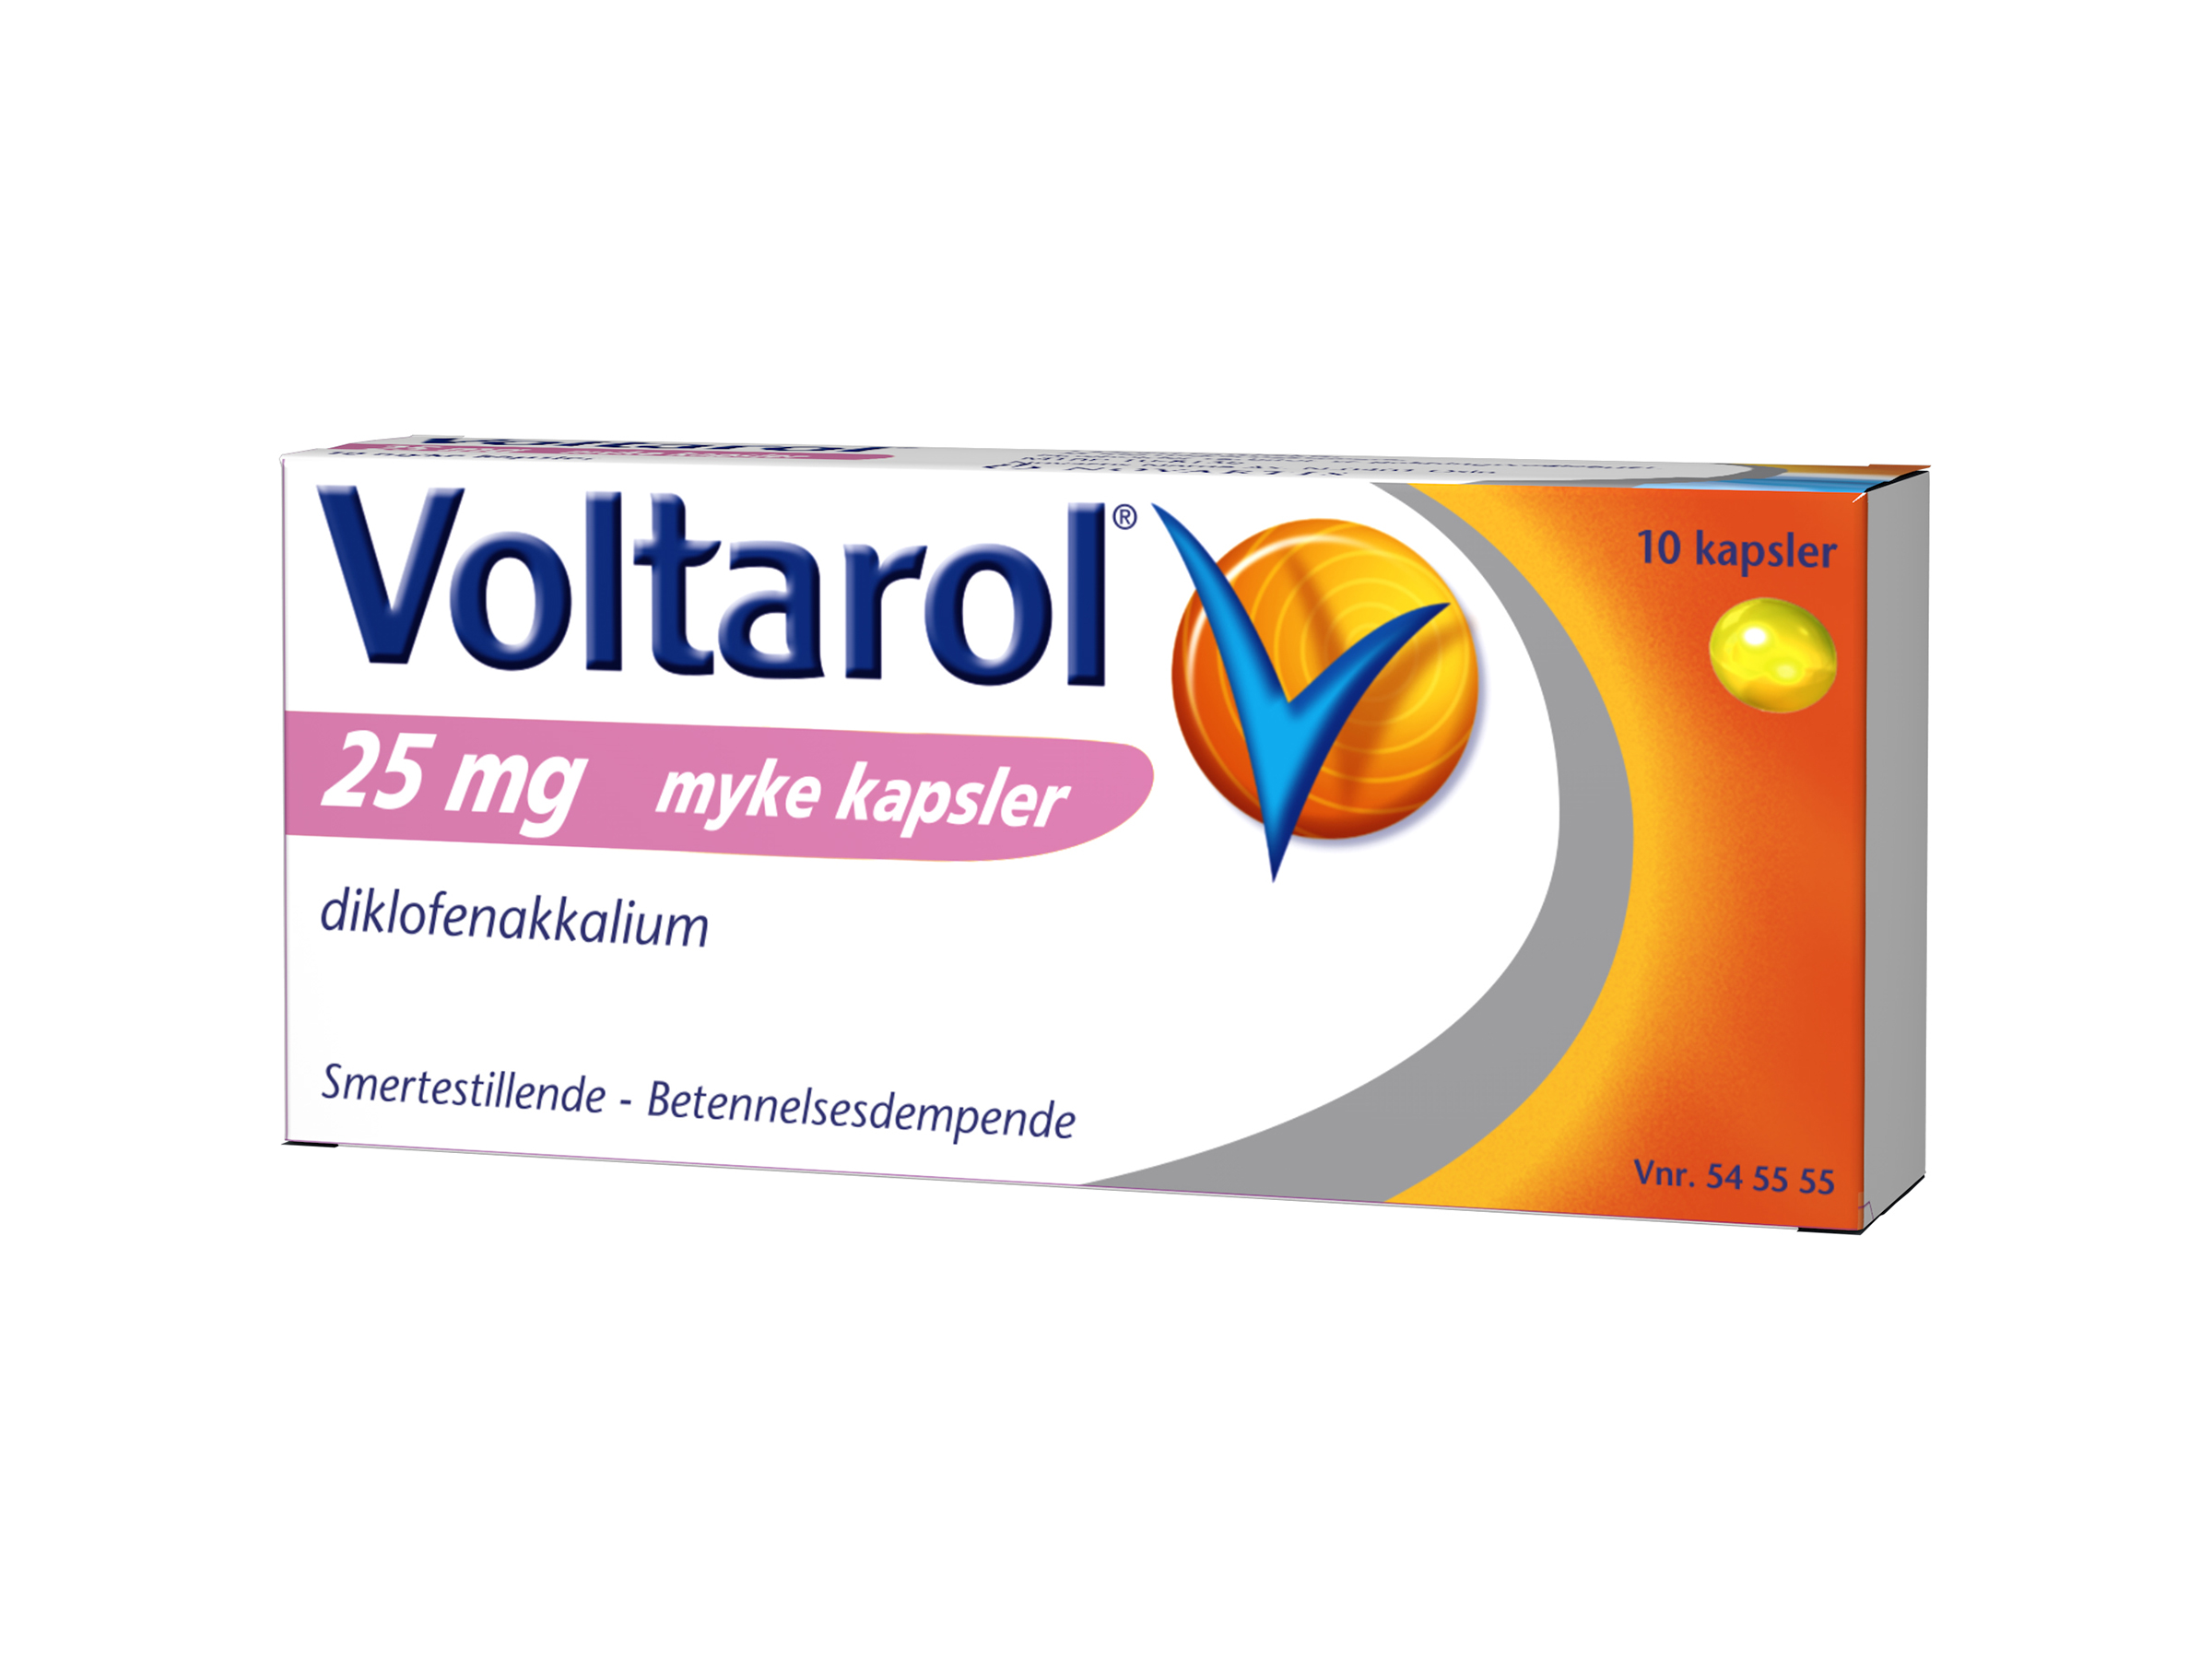 Voltarol Kapsler 25 mg, 10 stk.